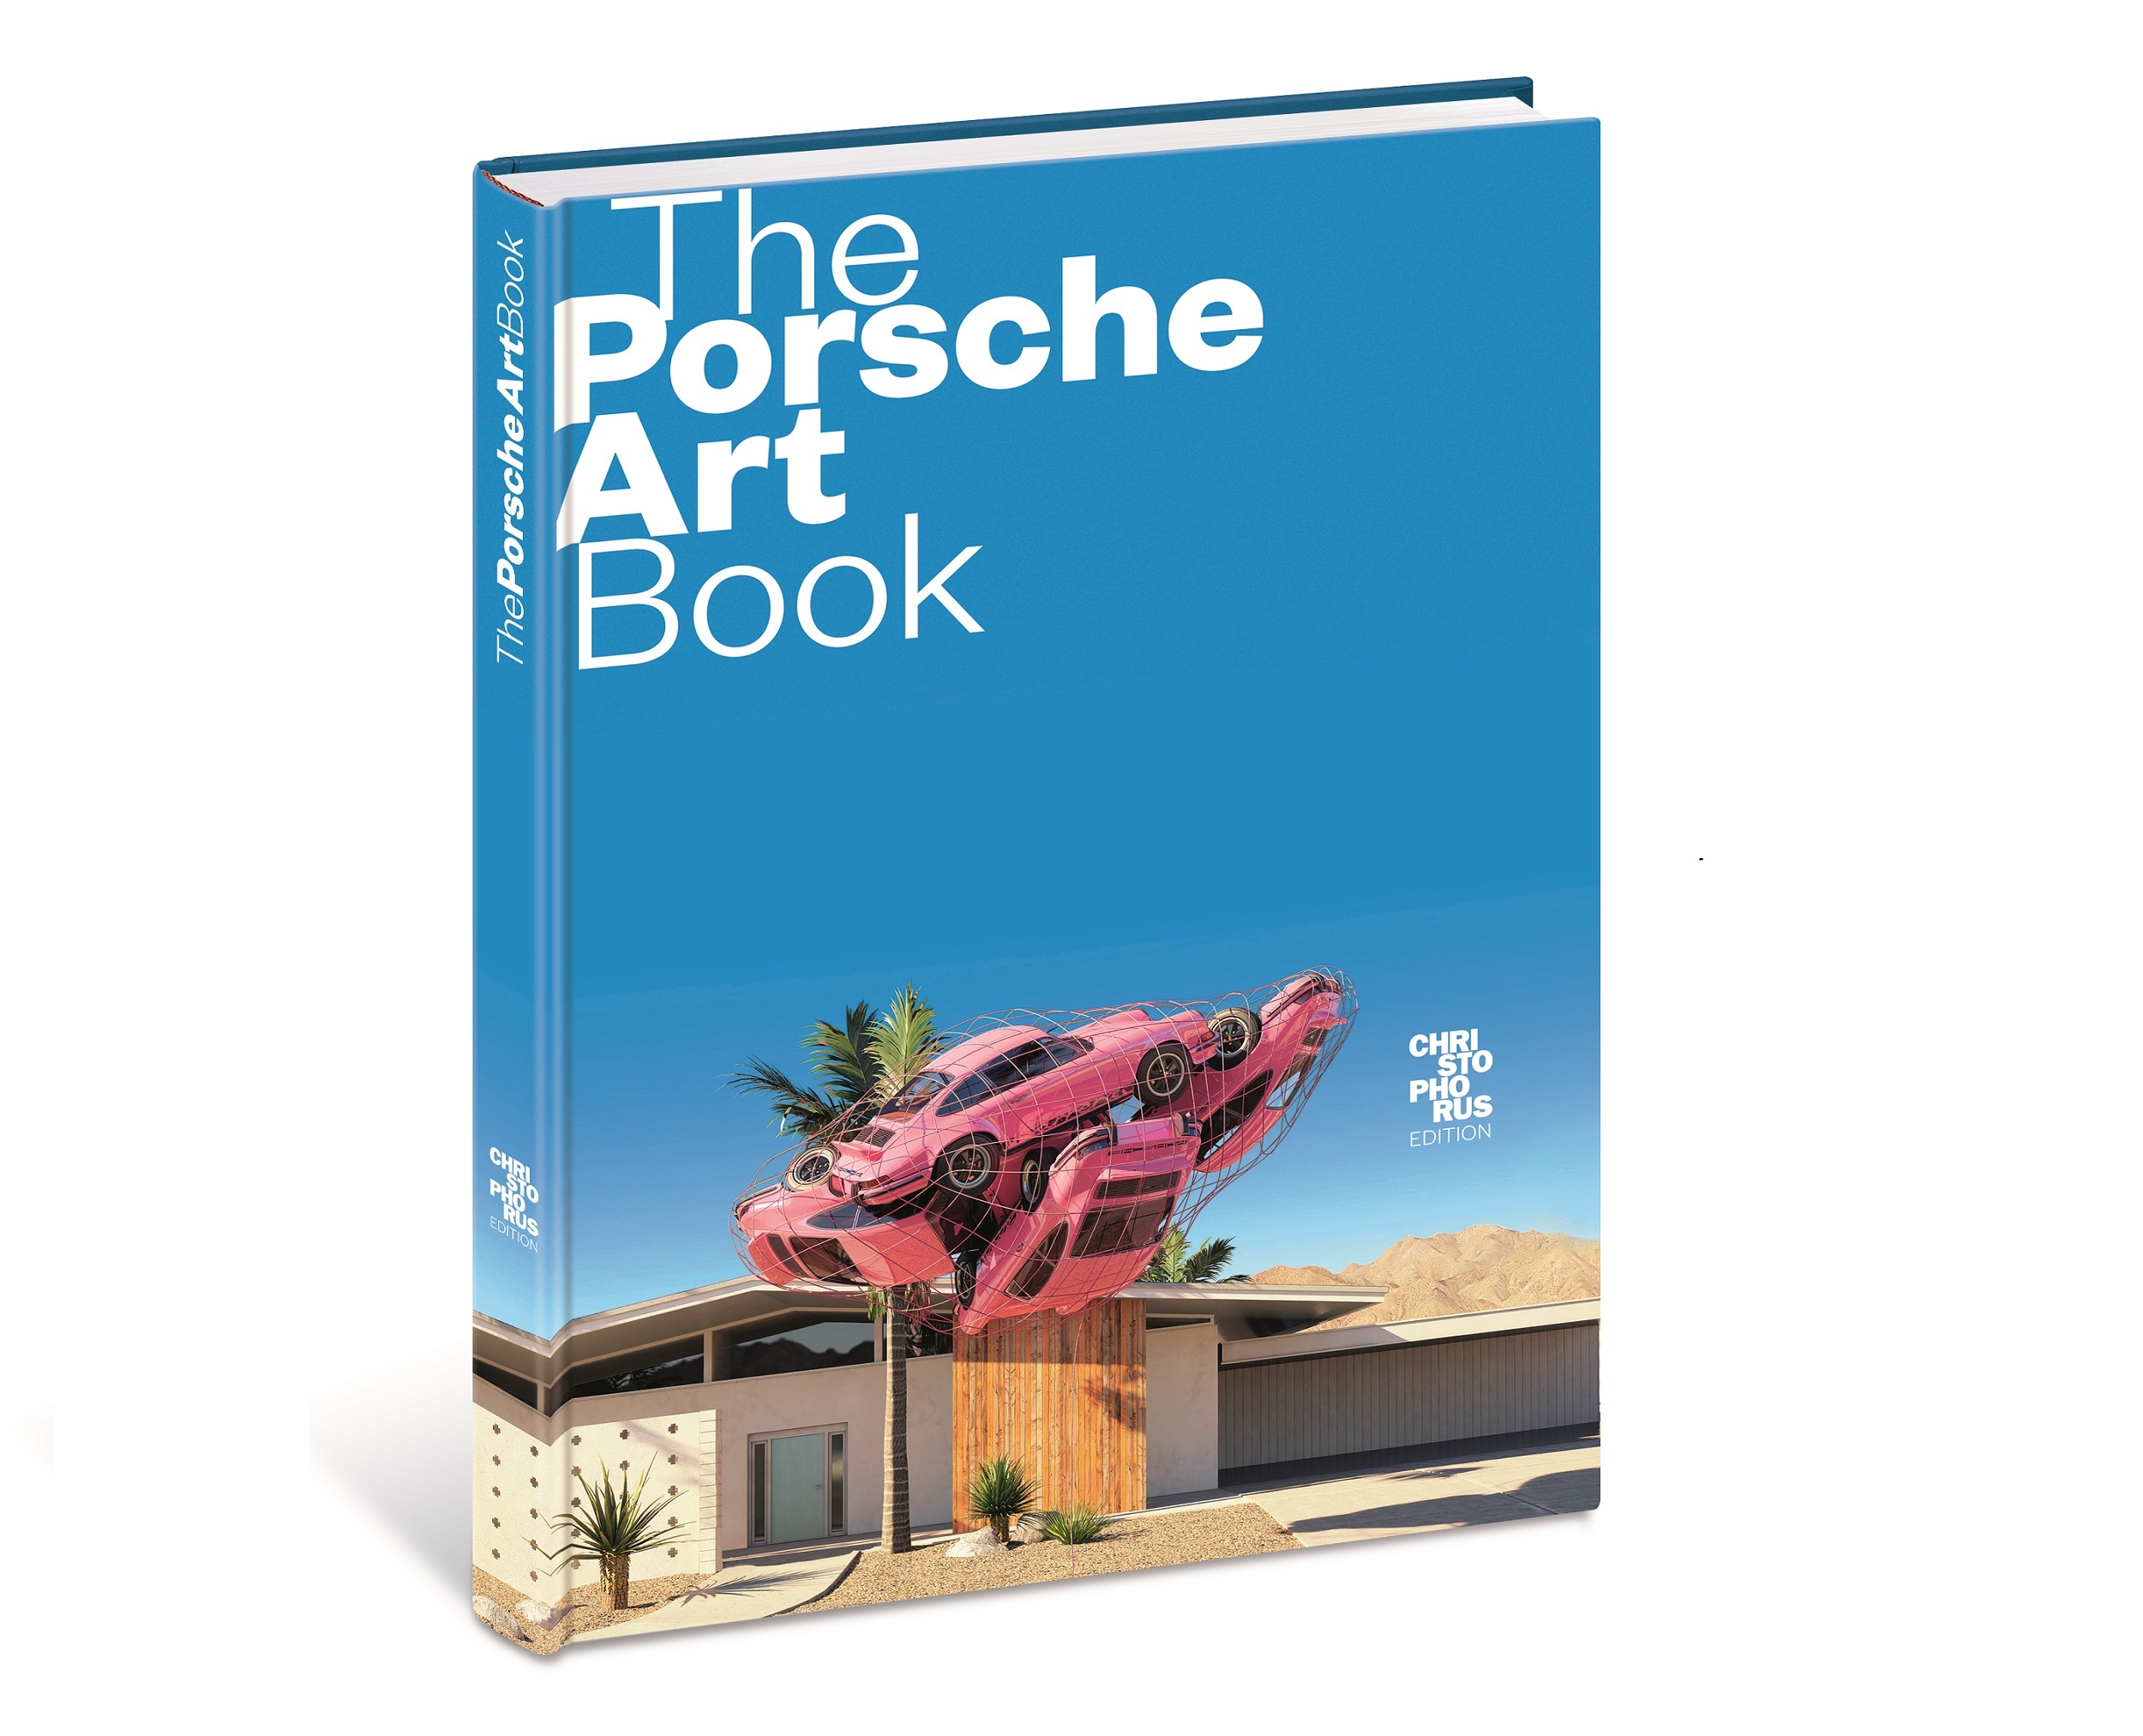 The Porsche Art Book